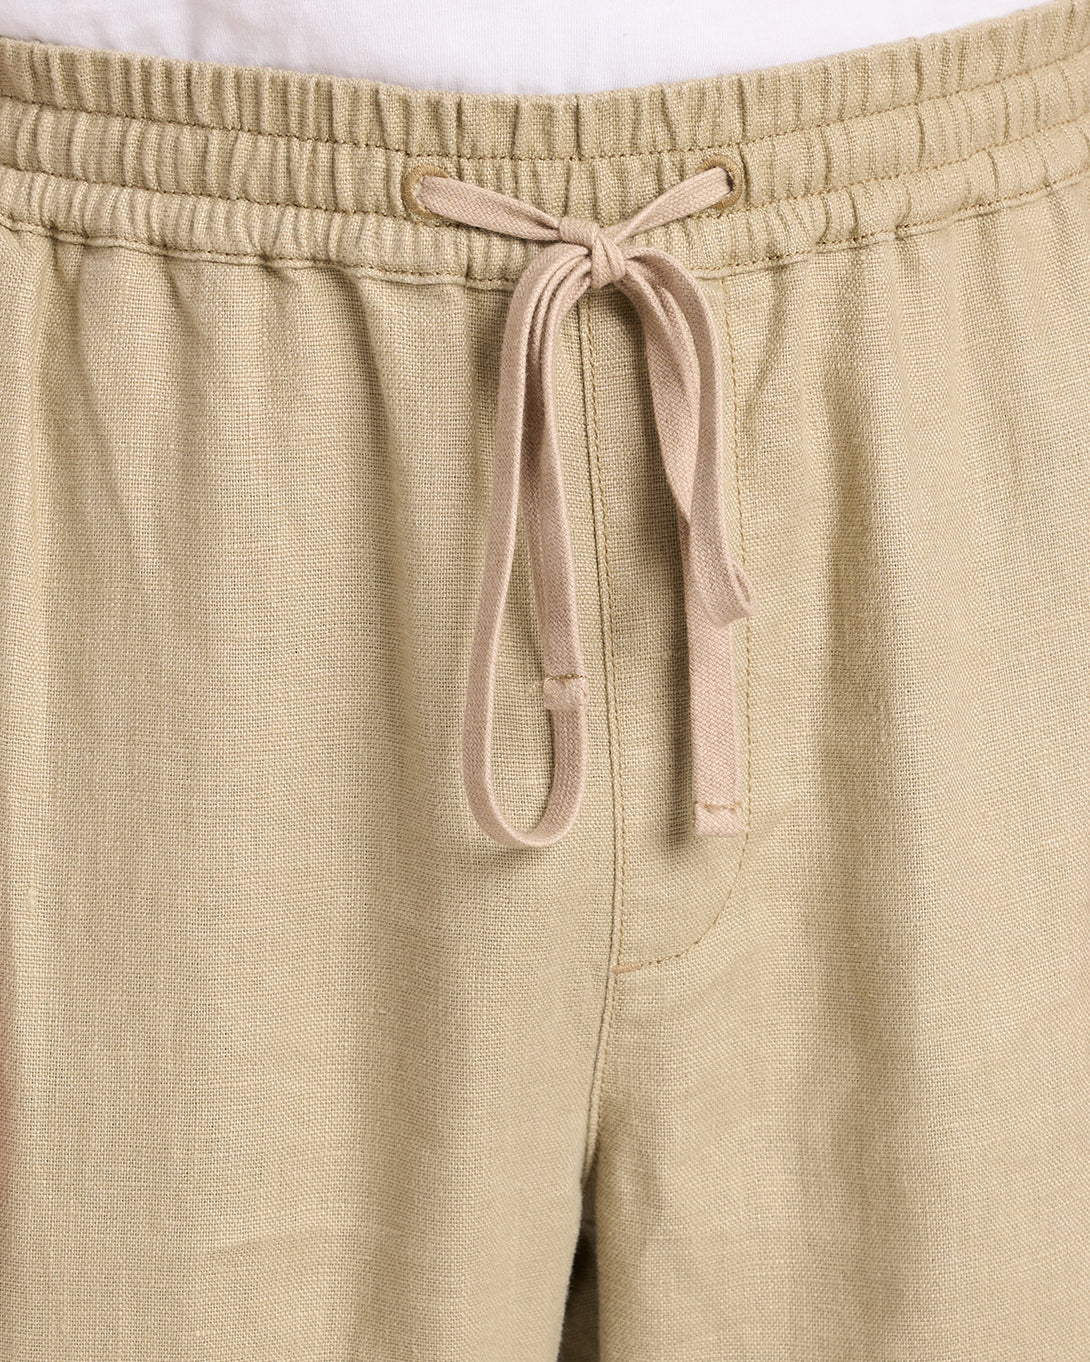 Khaki Ward Linen Pants Mens ONS Sumer Linen Drawstring Trouser